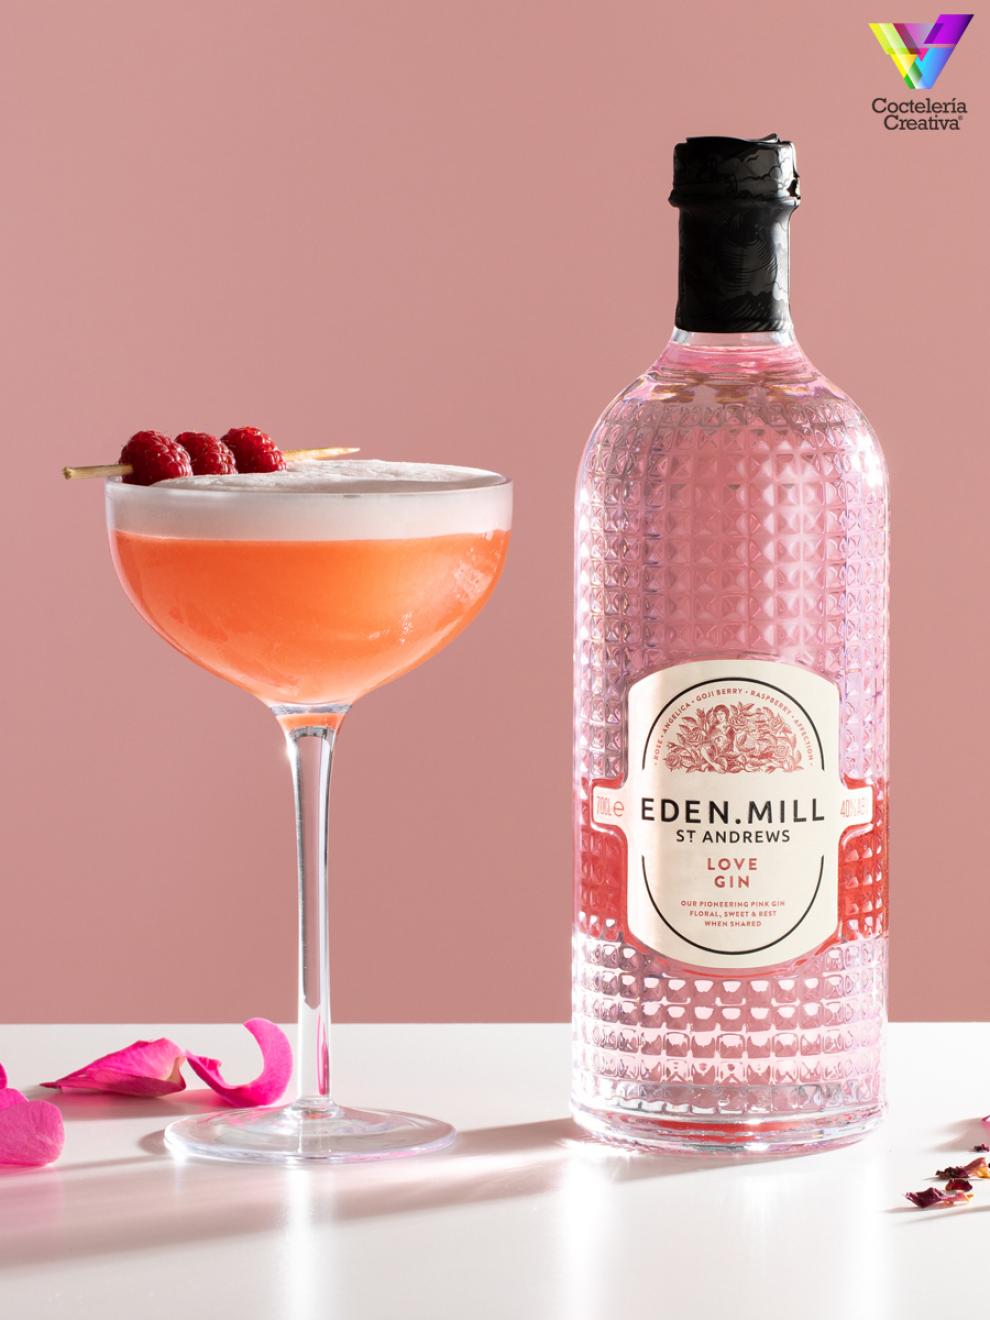 imagen del cóctel Love Club con botella Love Gin de Eden Mill